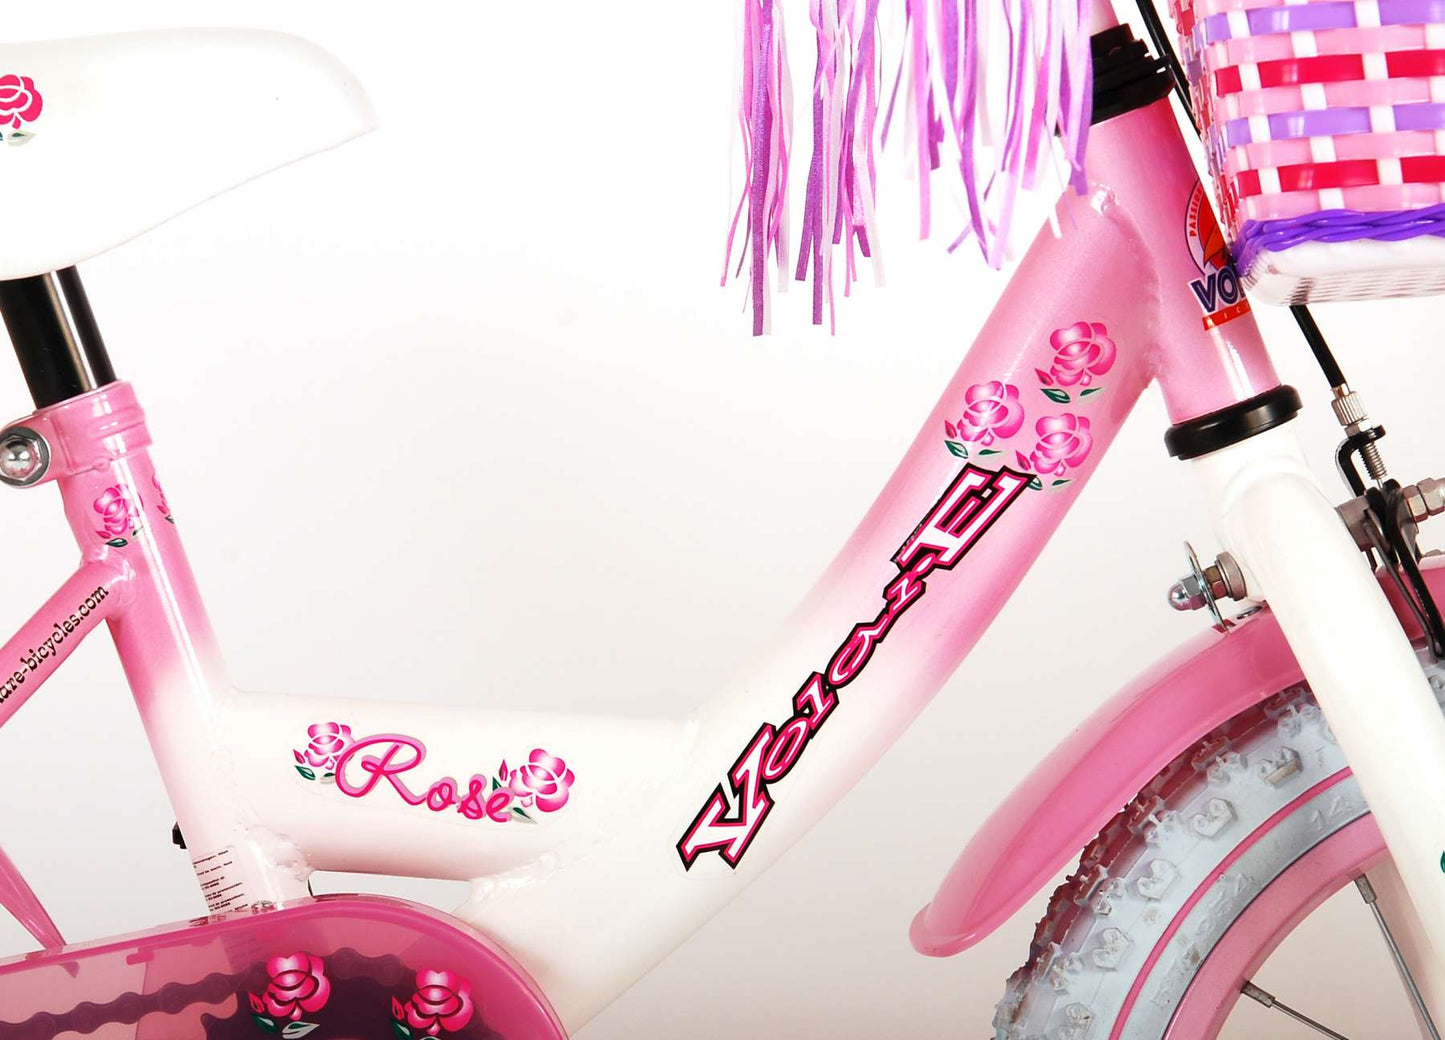 Bicycle per bambini di Vlatare Rose - Girls - 14 pollici - Bianco rosa - 95% assemblato